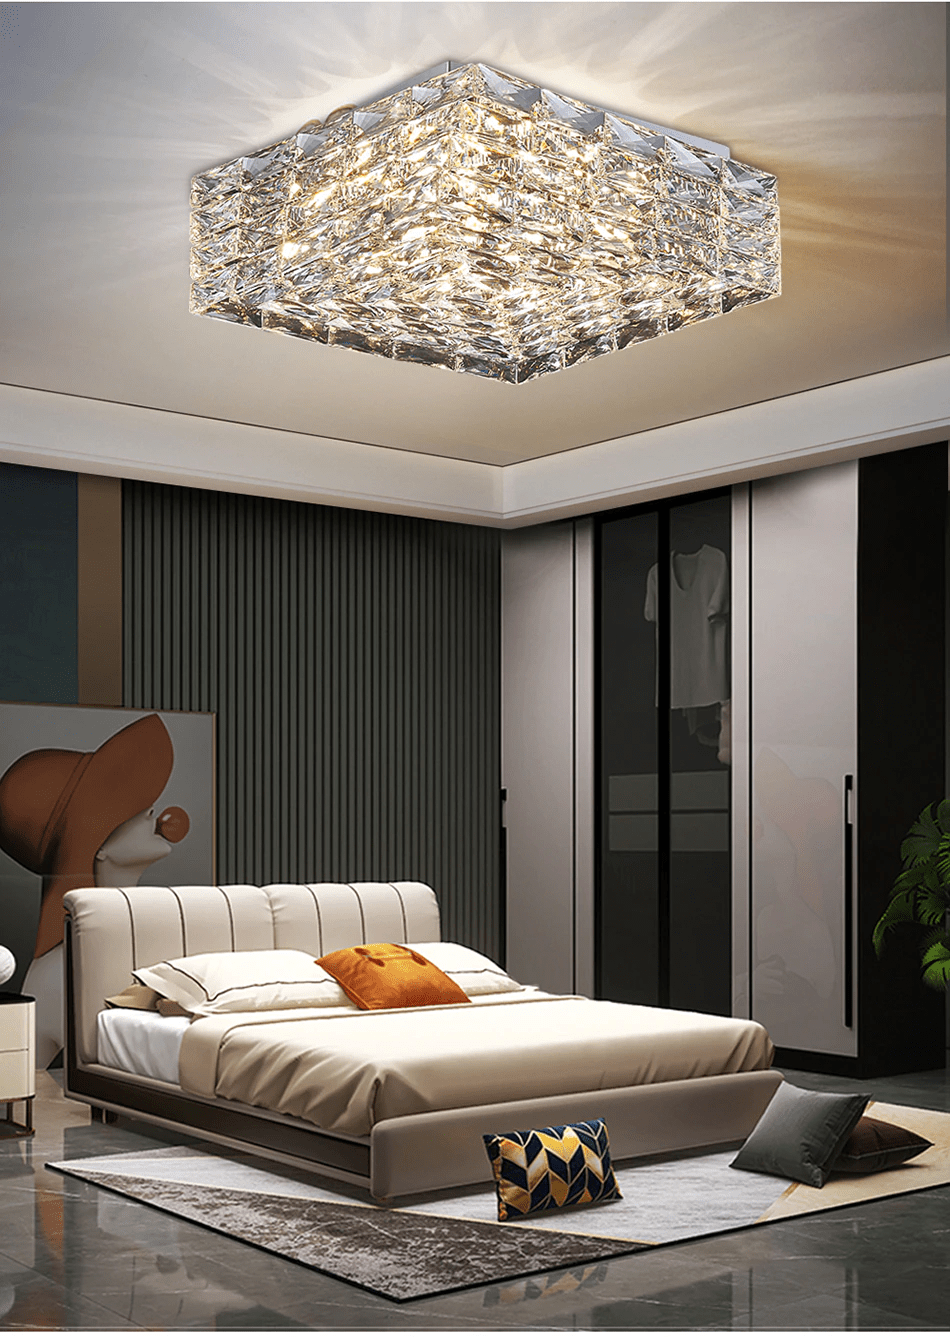 Fancy? Chrome square cristal ceiling chandelier for bedroom, living room, dining room